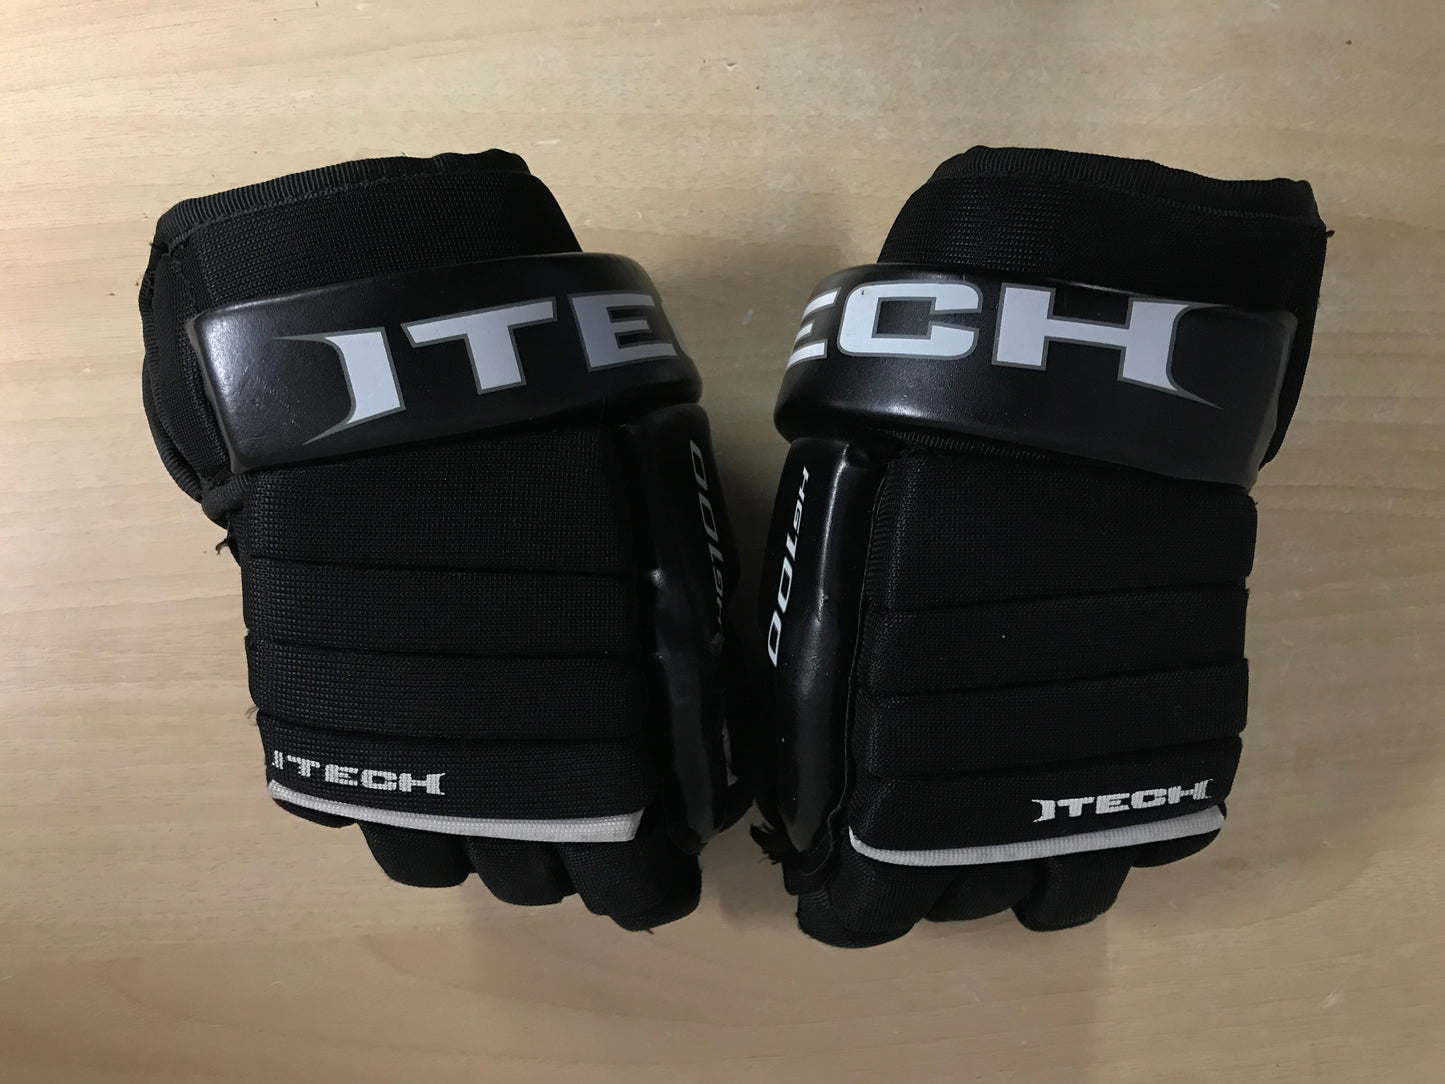 Hockey Gloves Child Size 10 inch Itech